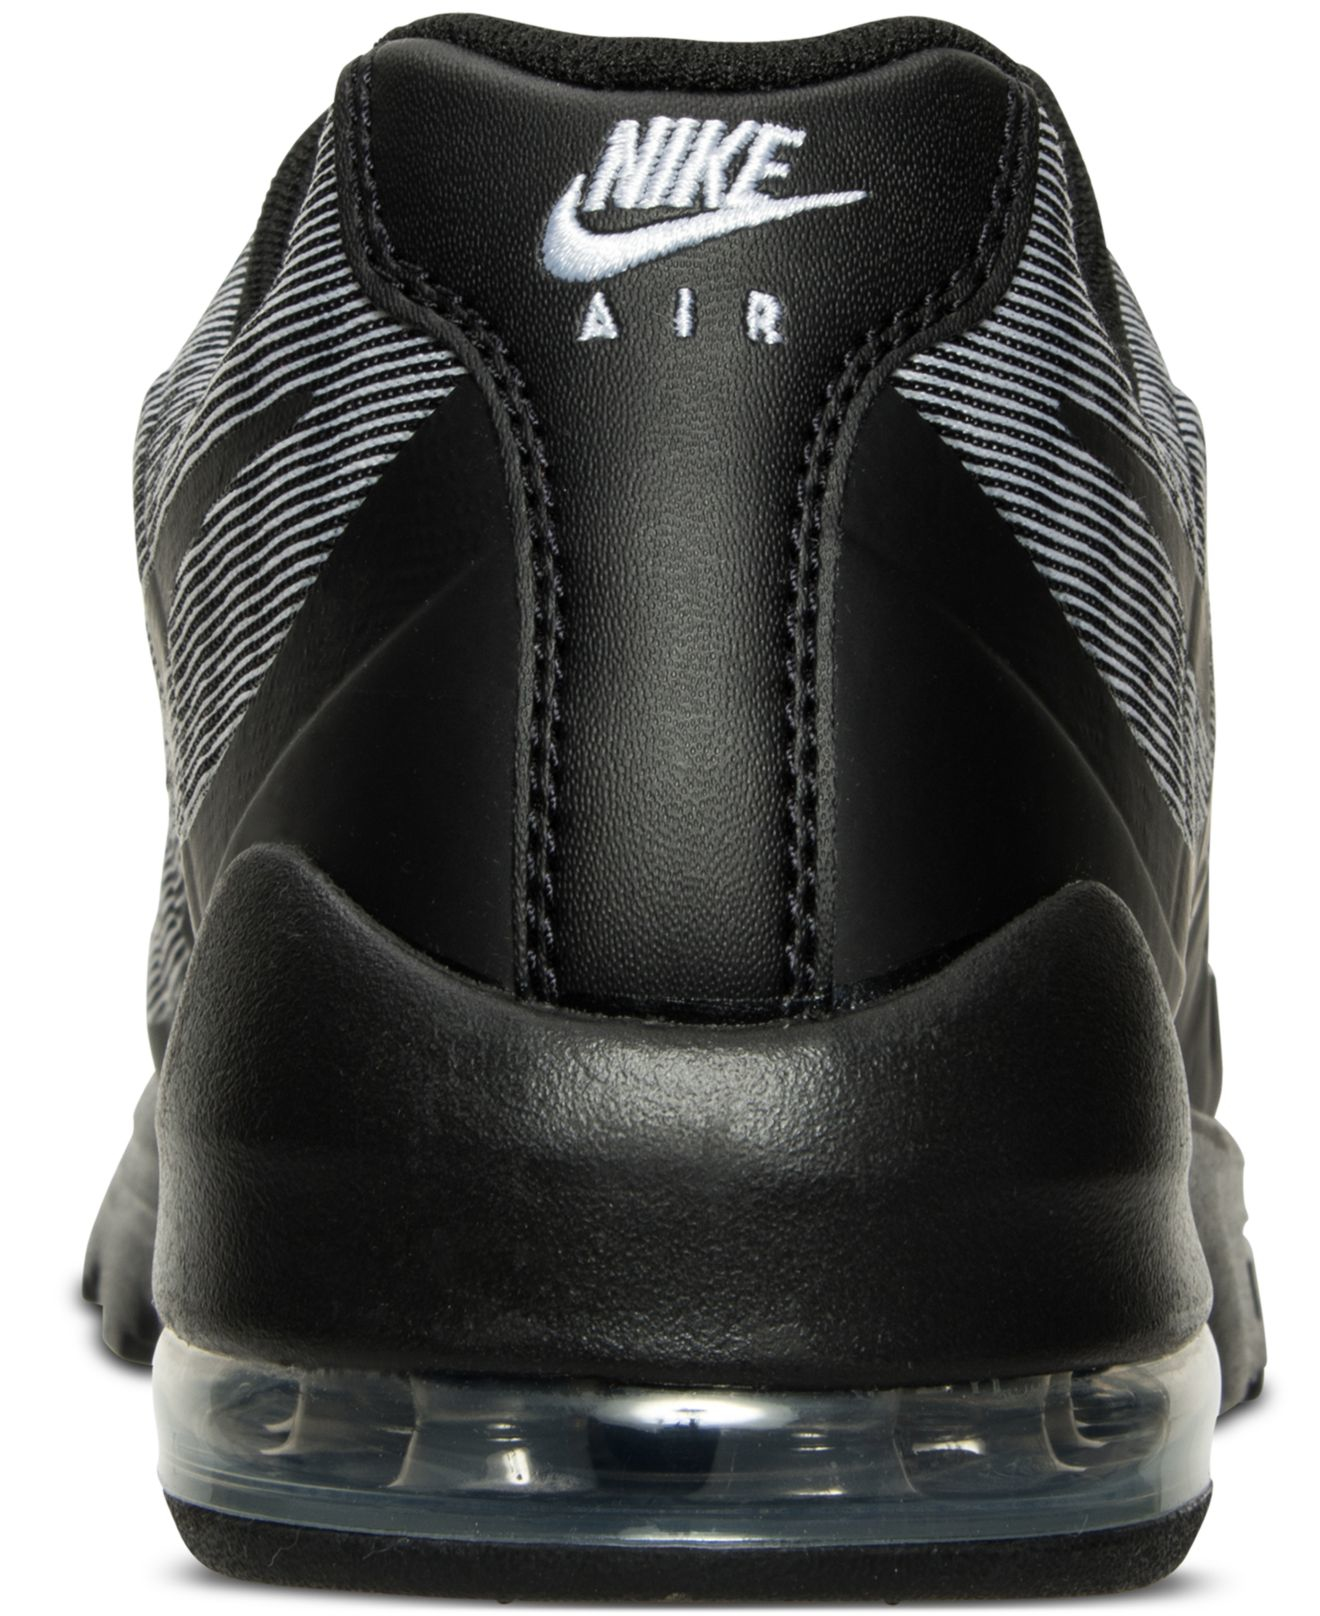 Nike Synthetic Men S Air Max Invigor Premium Running Sneakers From Finish Line In Black Black